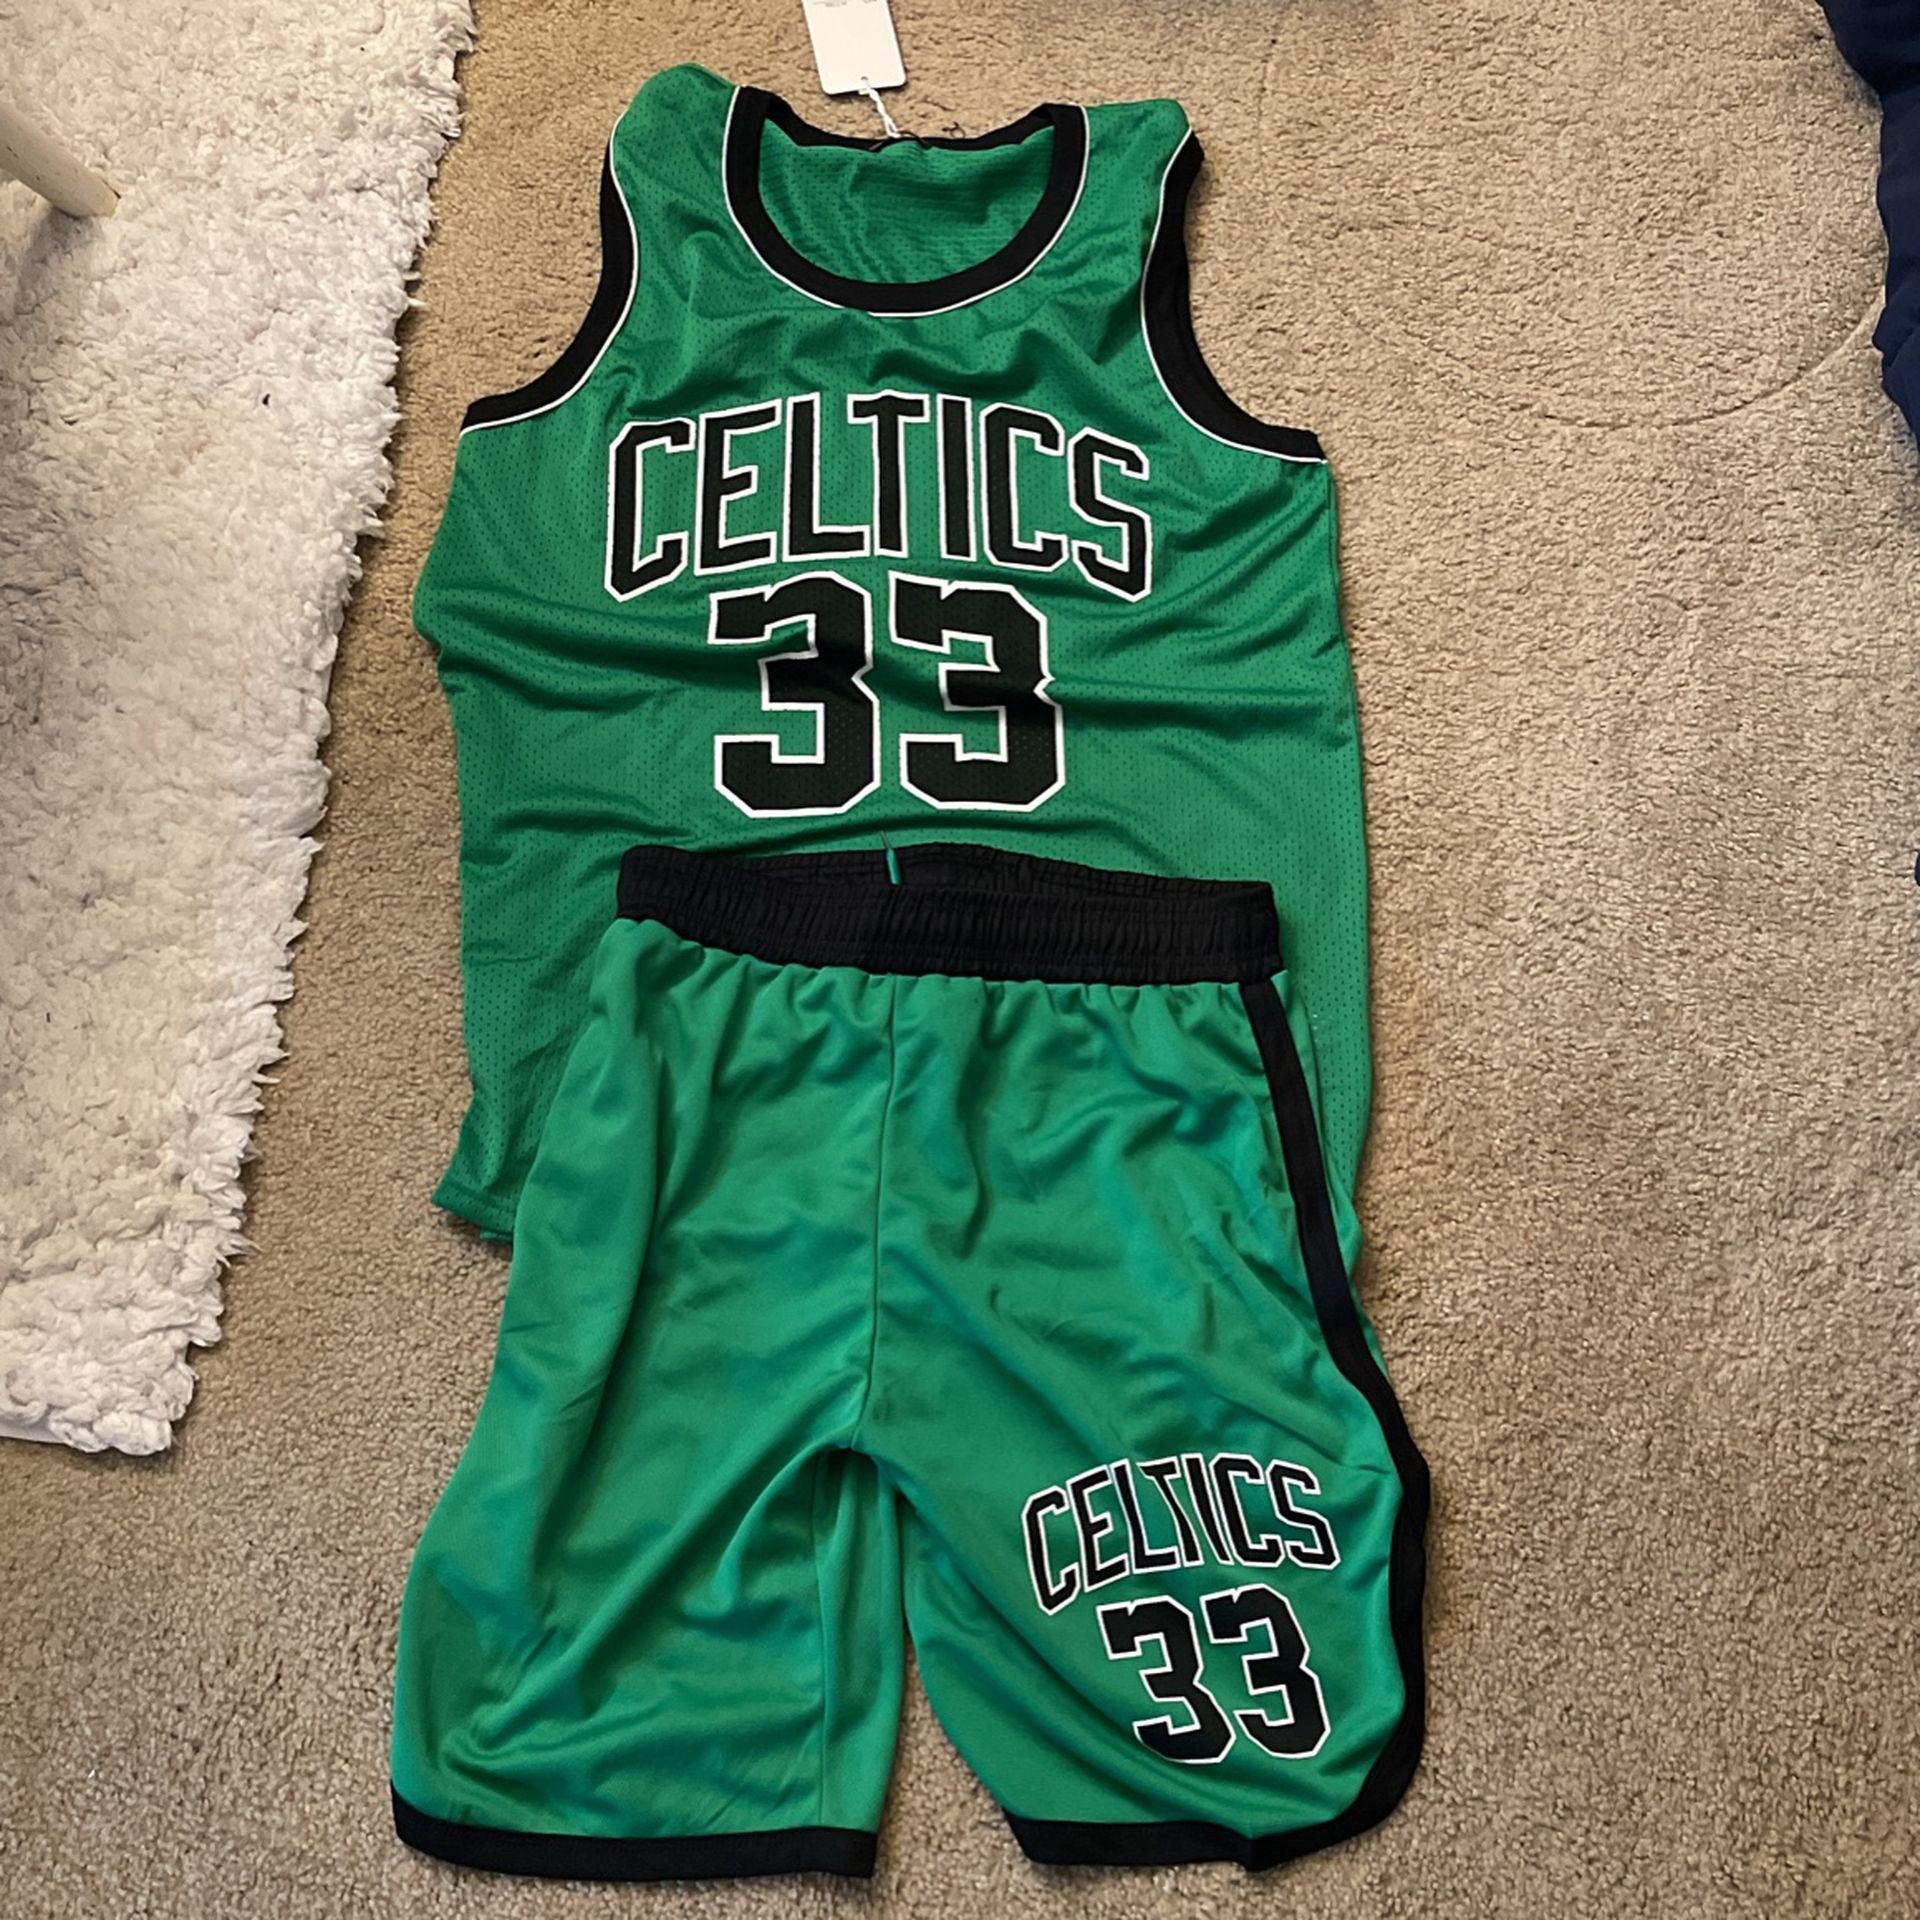 Celtics Jersey And Shorts 